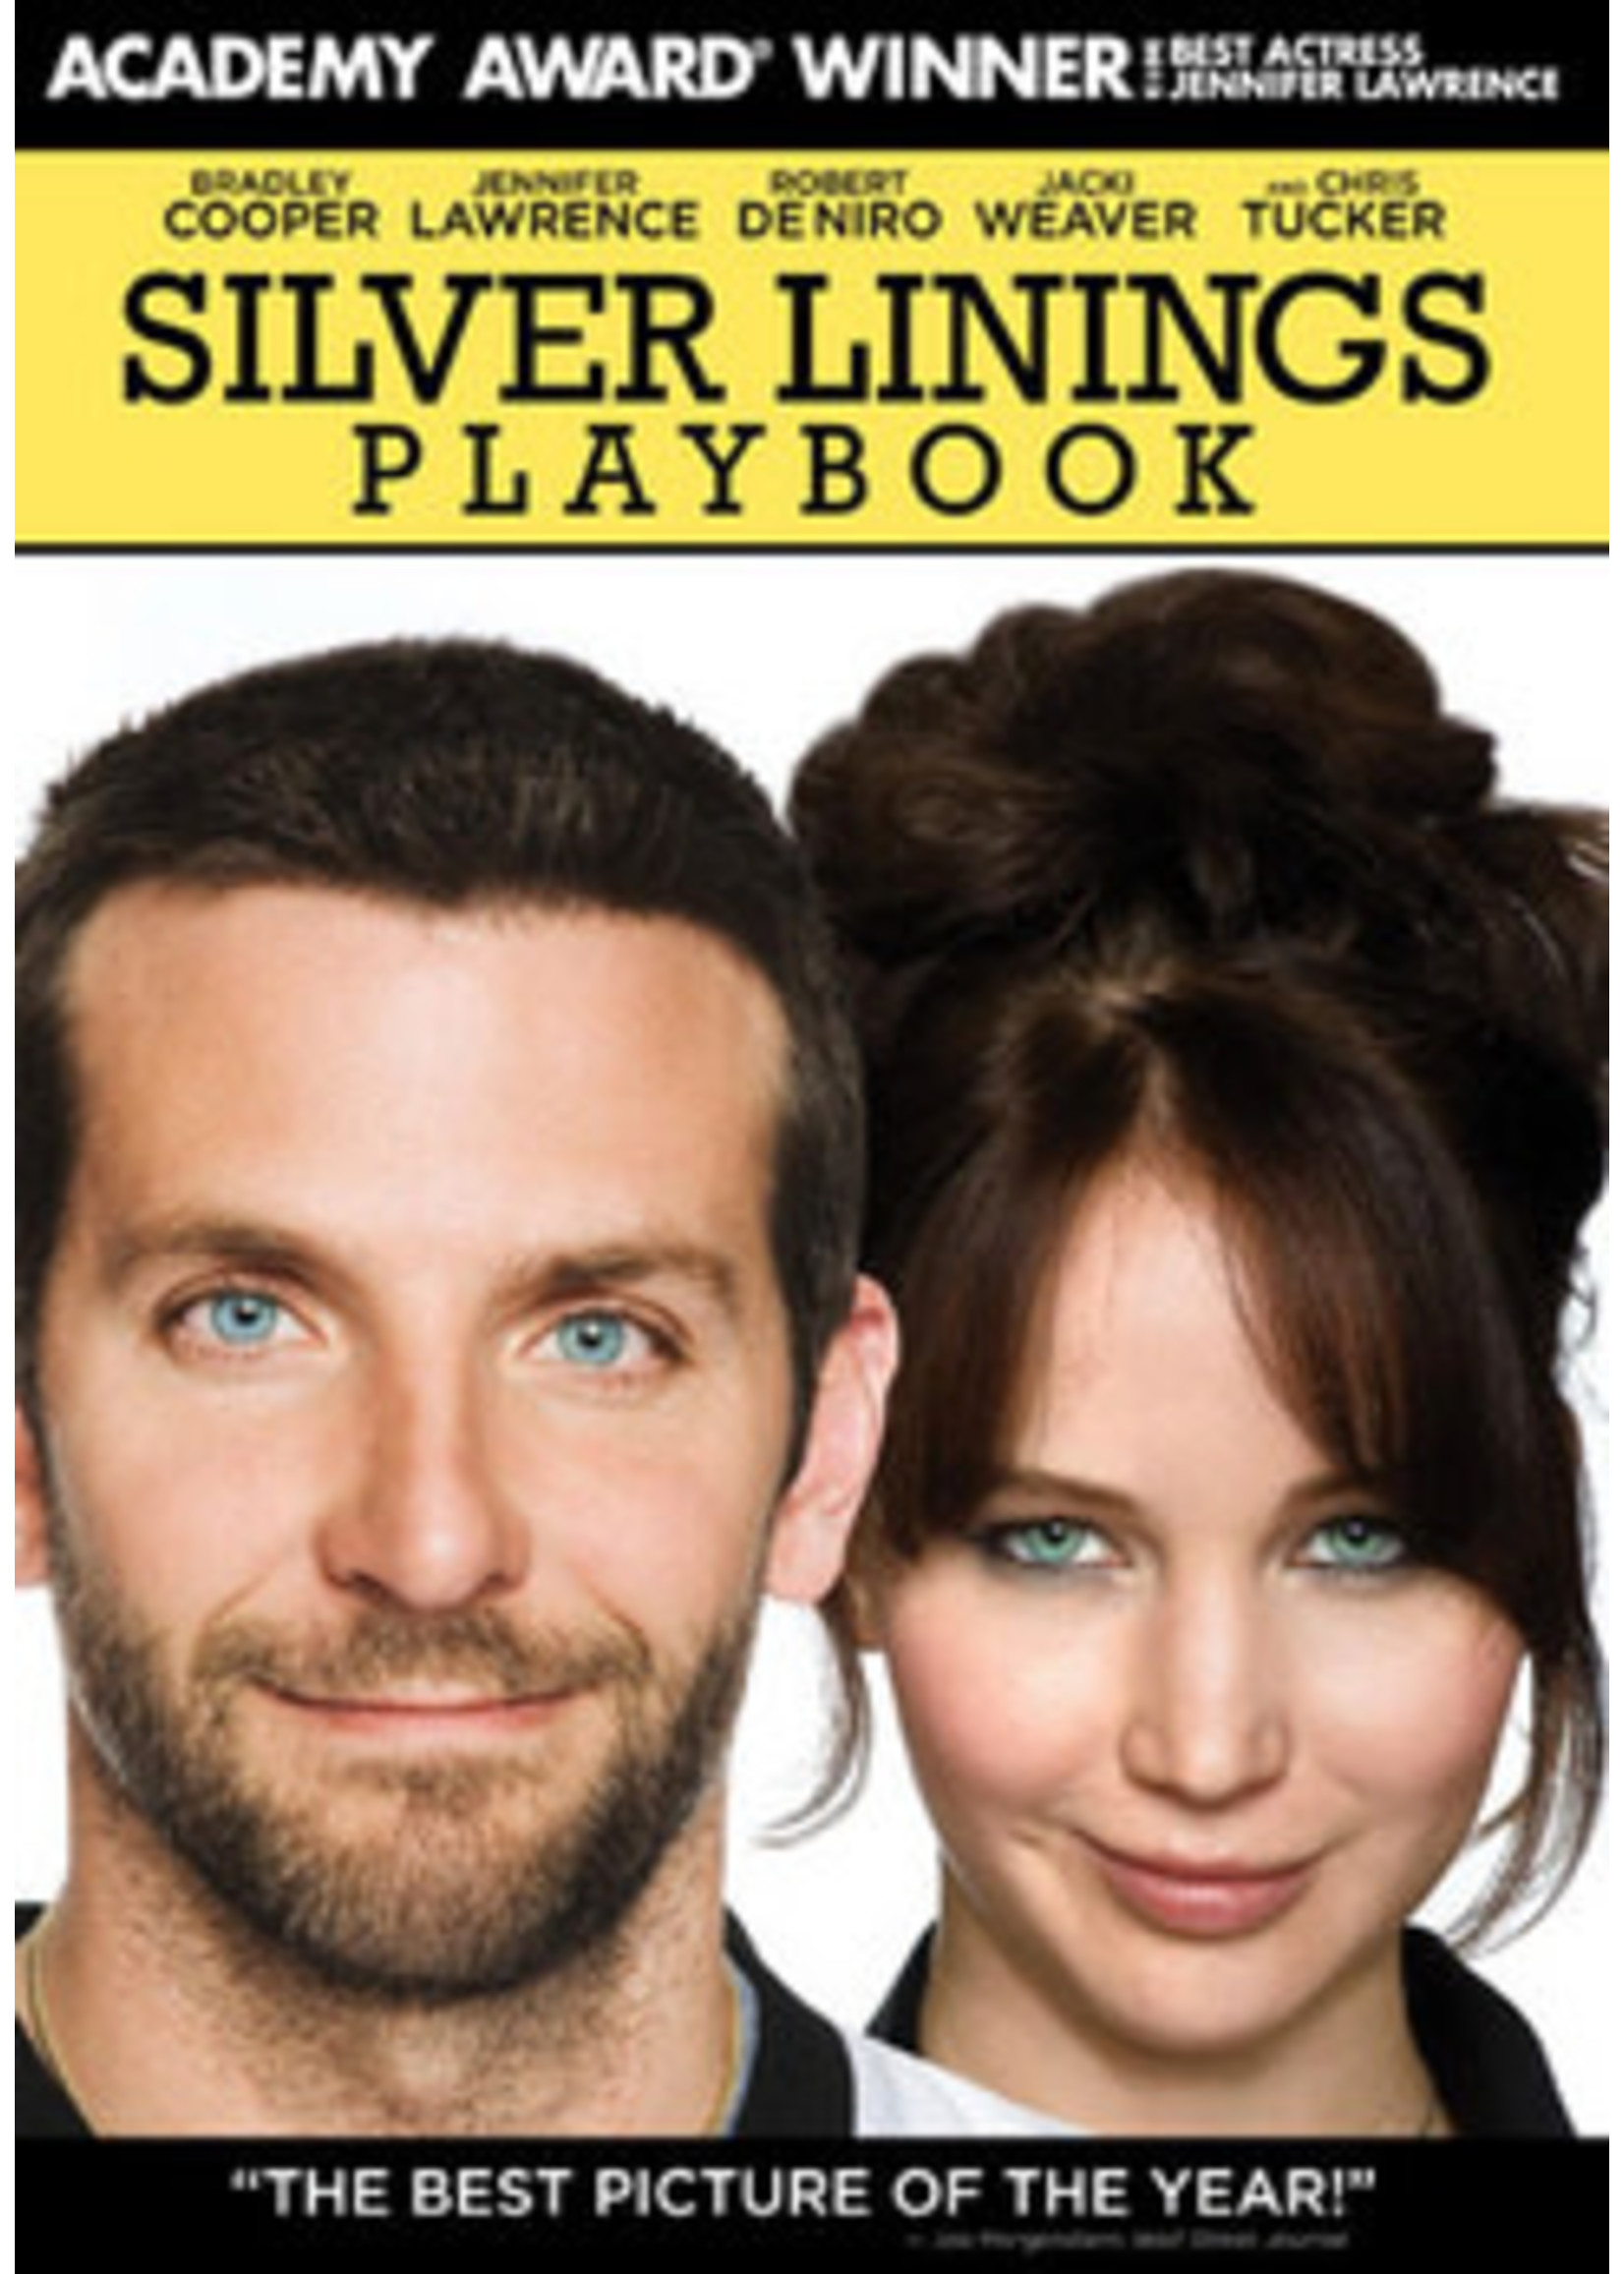 Silver Linings Playbook DVD